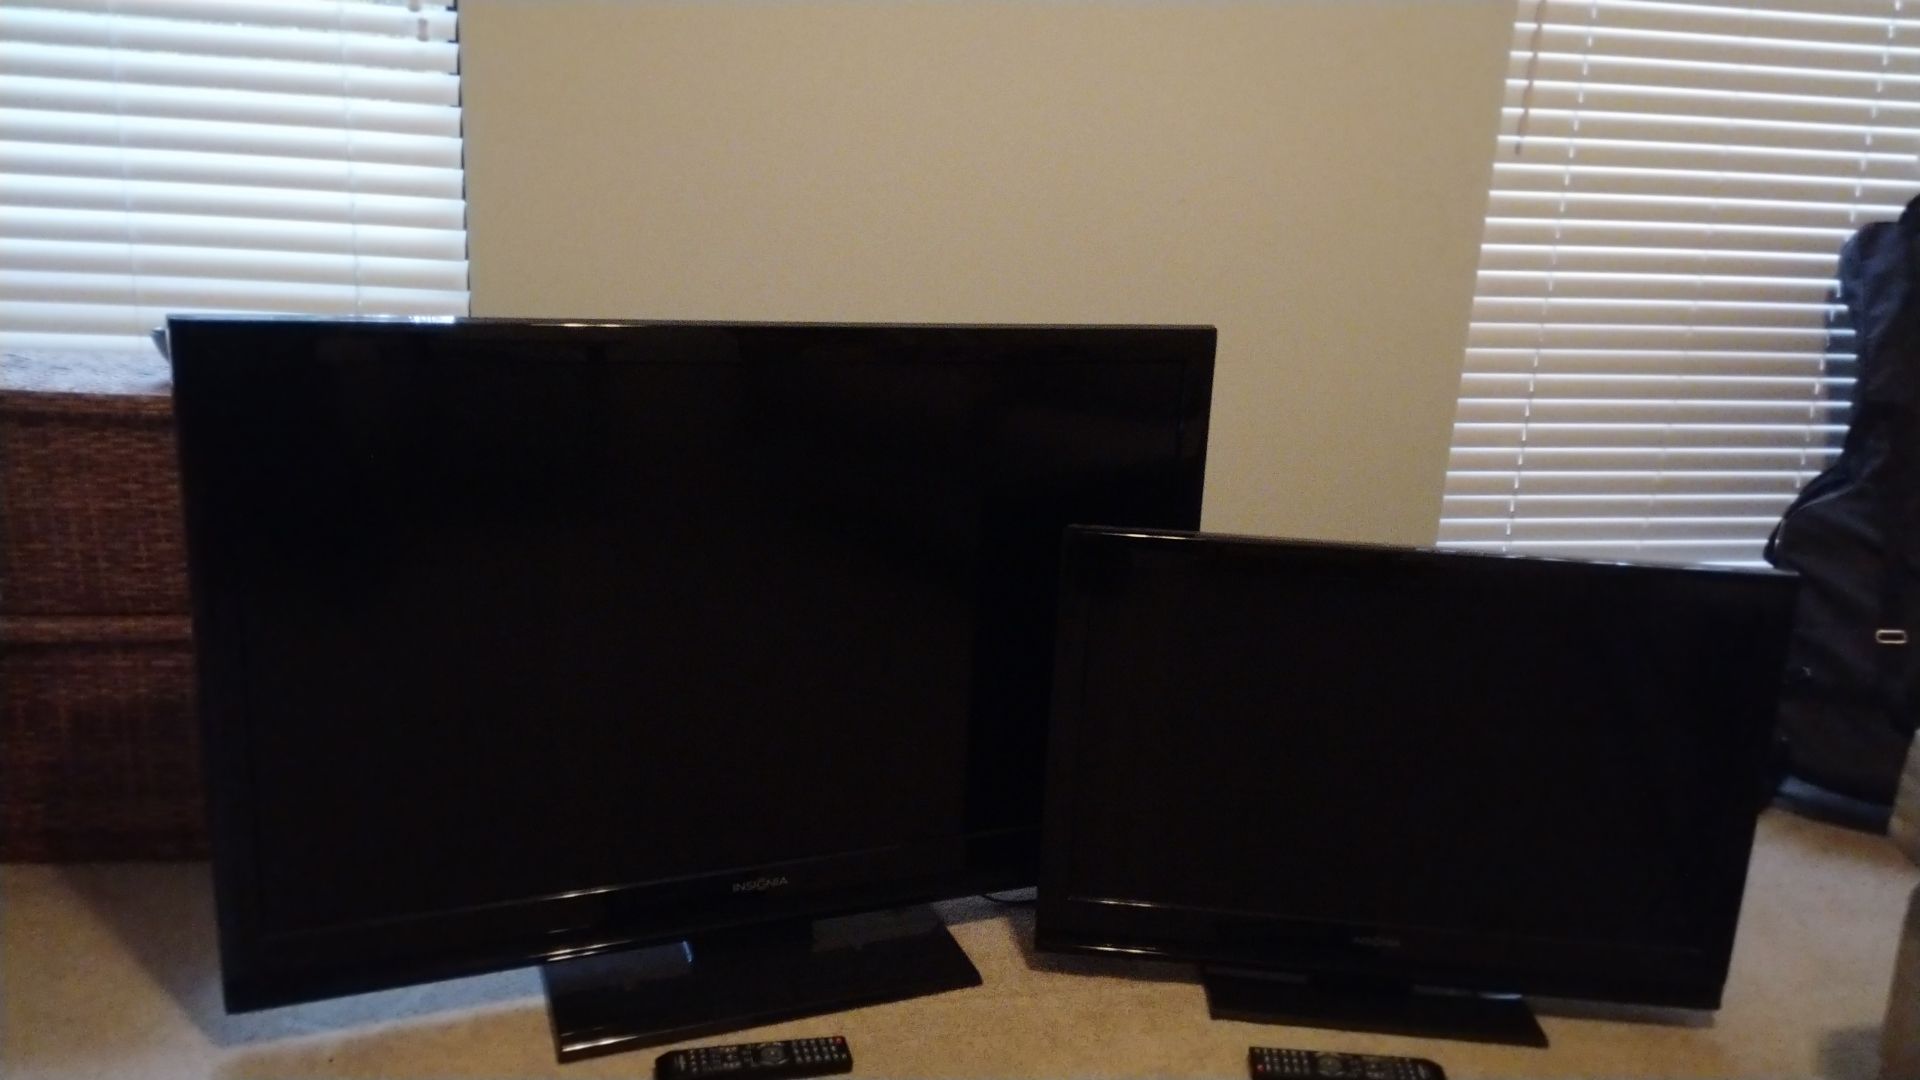 Two Flat-Screen TVs, 46" & 32"